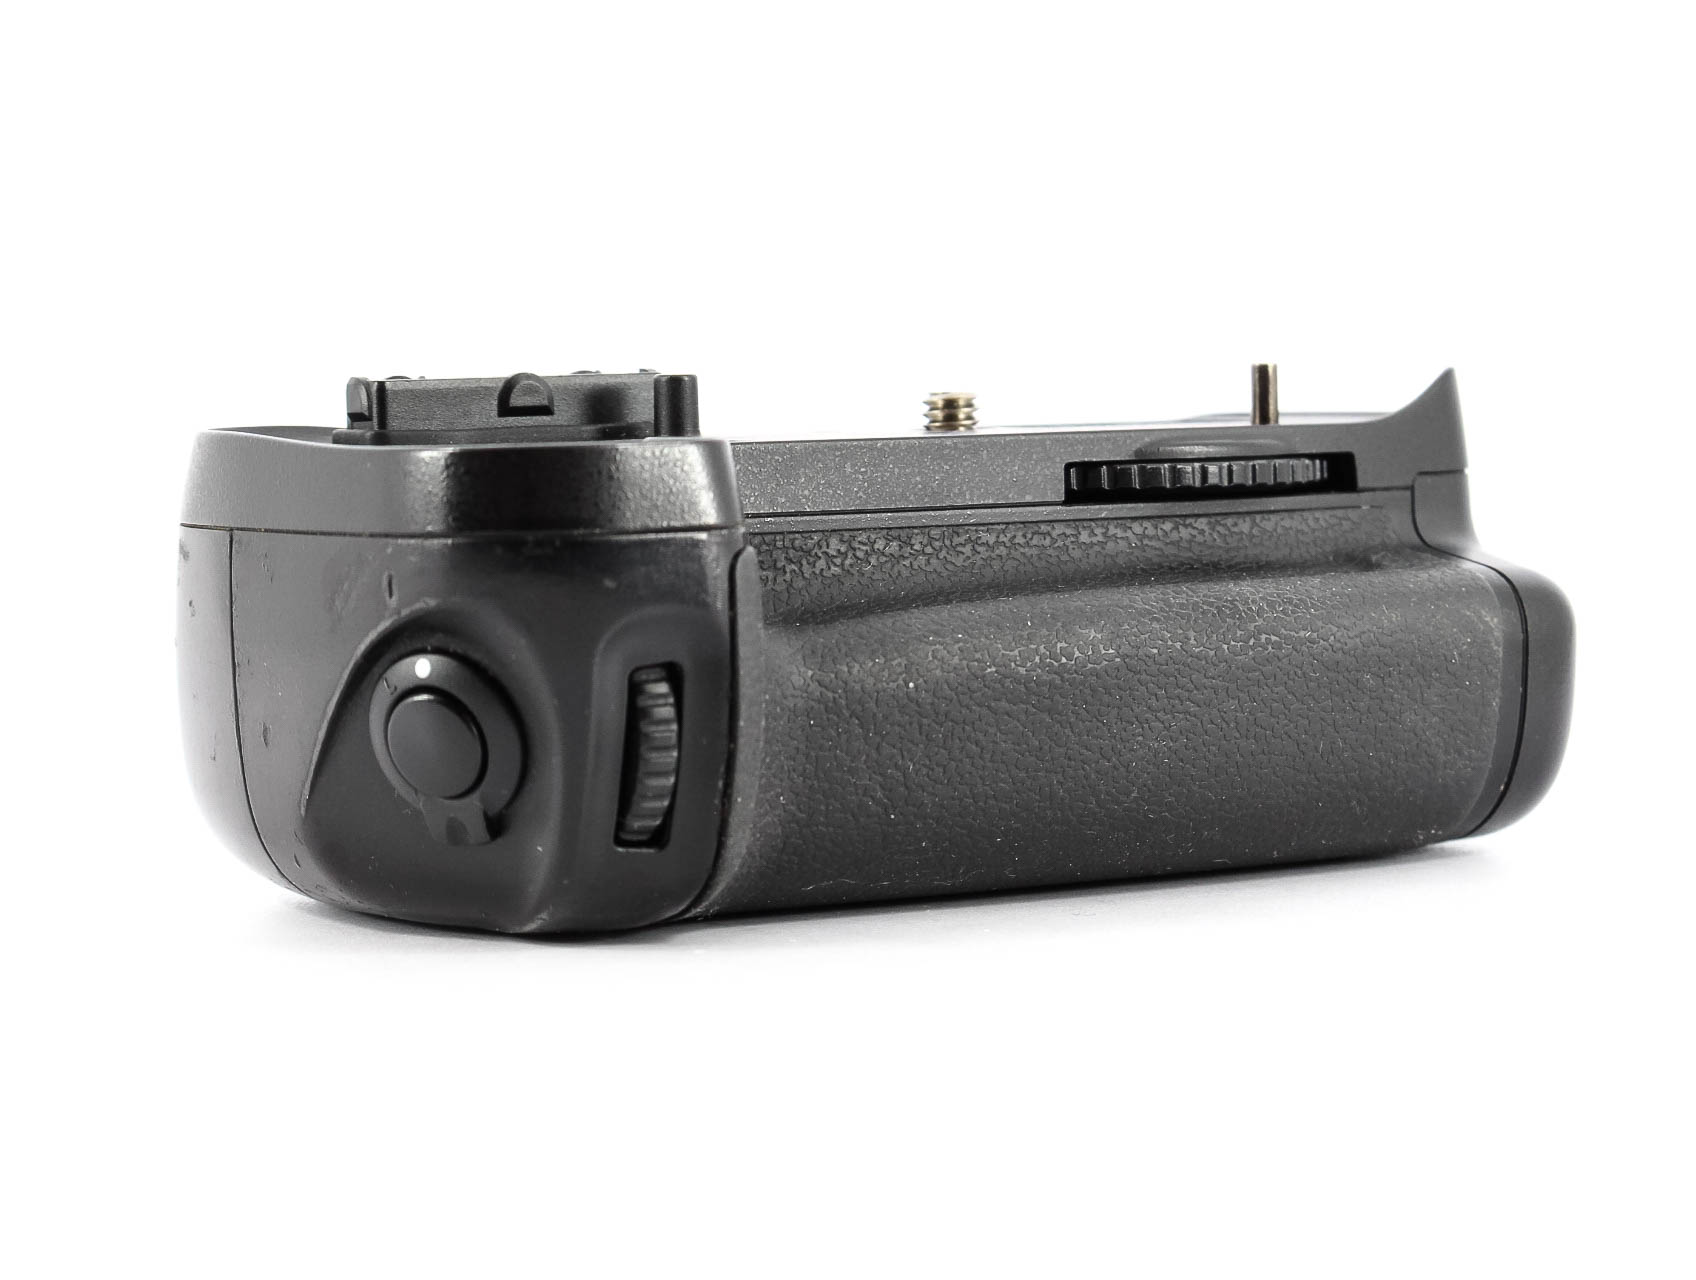 For Nikon D7000 DSLR Camera Compatible with EN-EL15 Battery Neewer® Professional Battery Grip Replacement for Nikon MB-D11 Battery Grip 